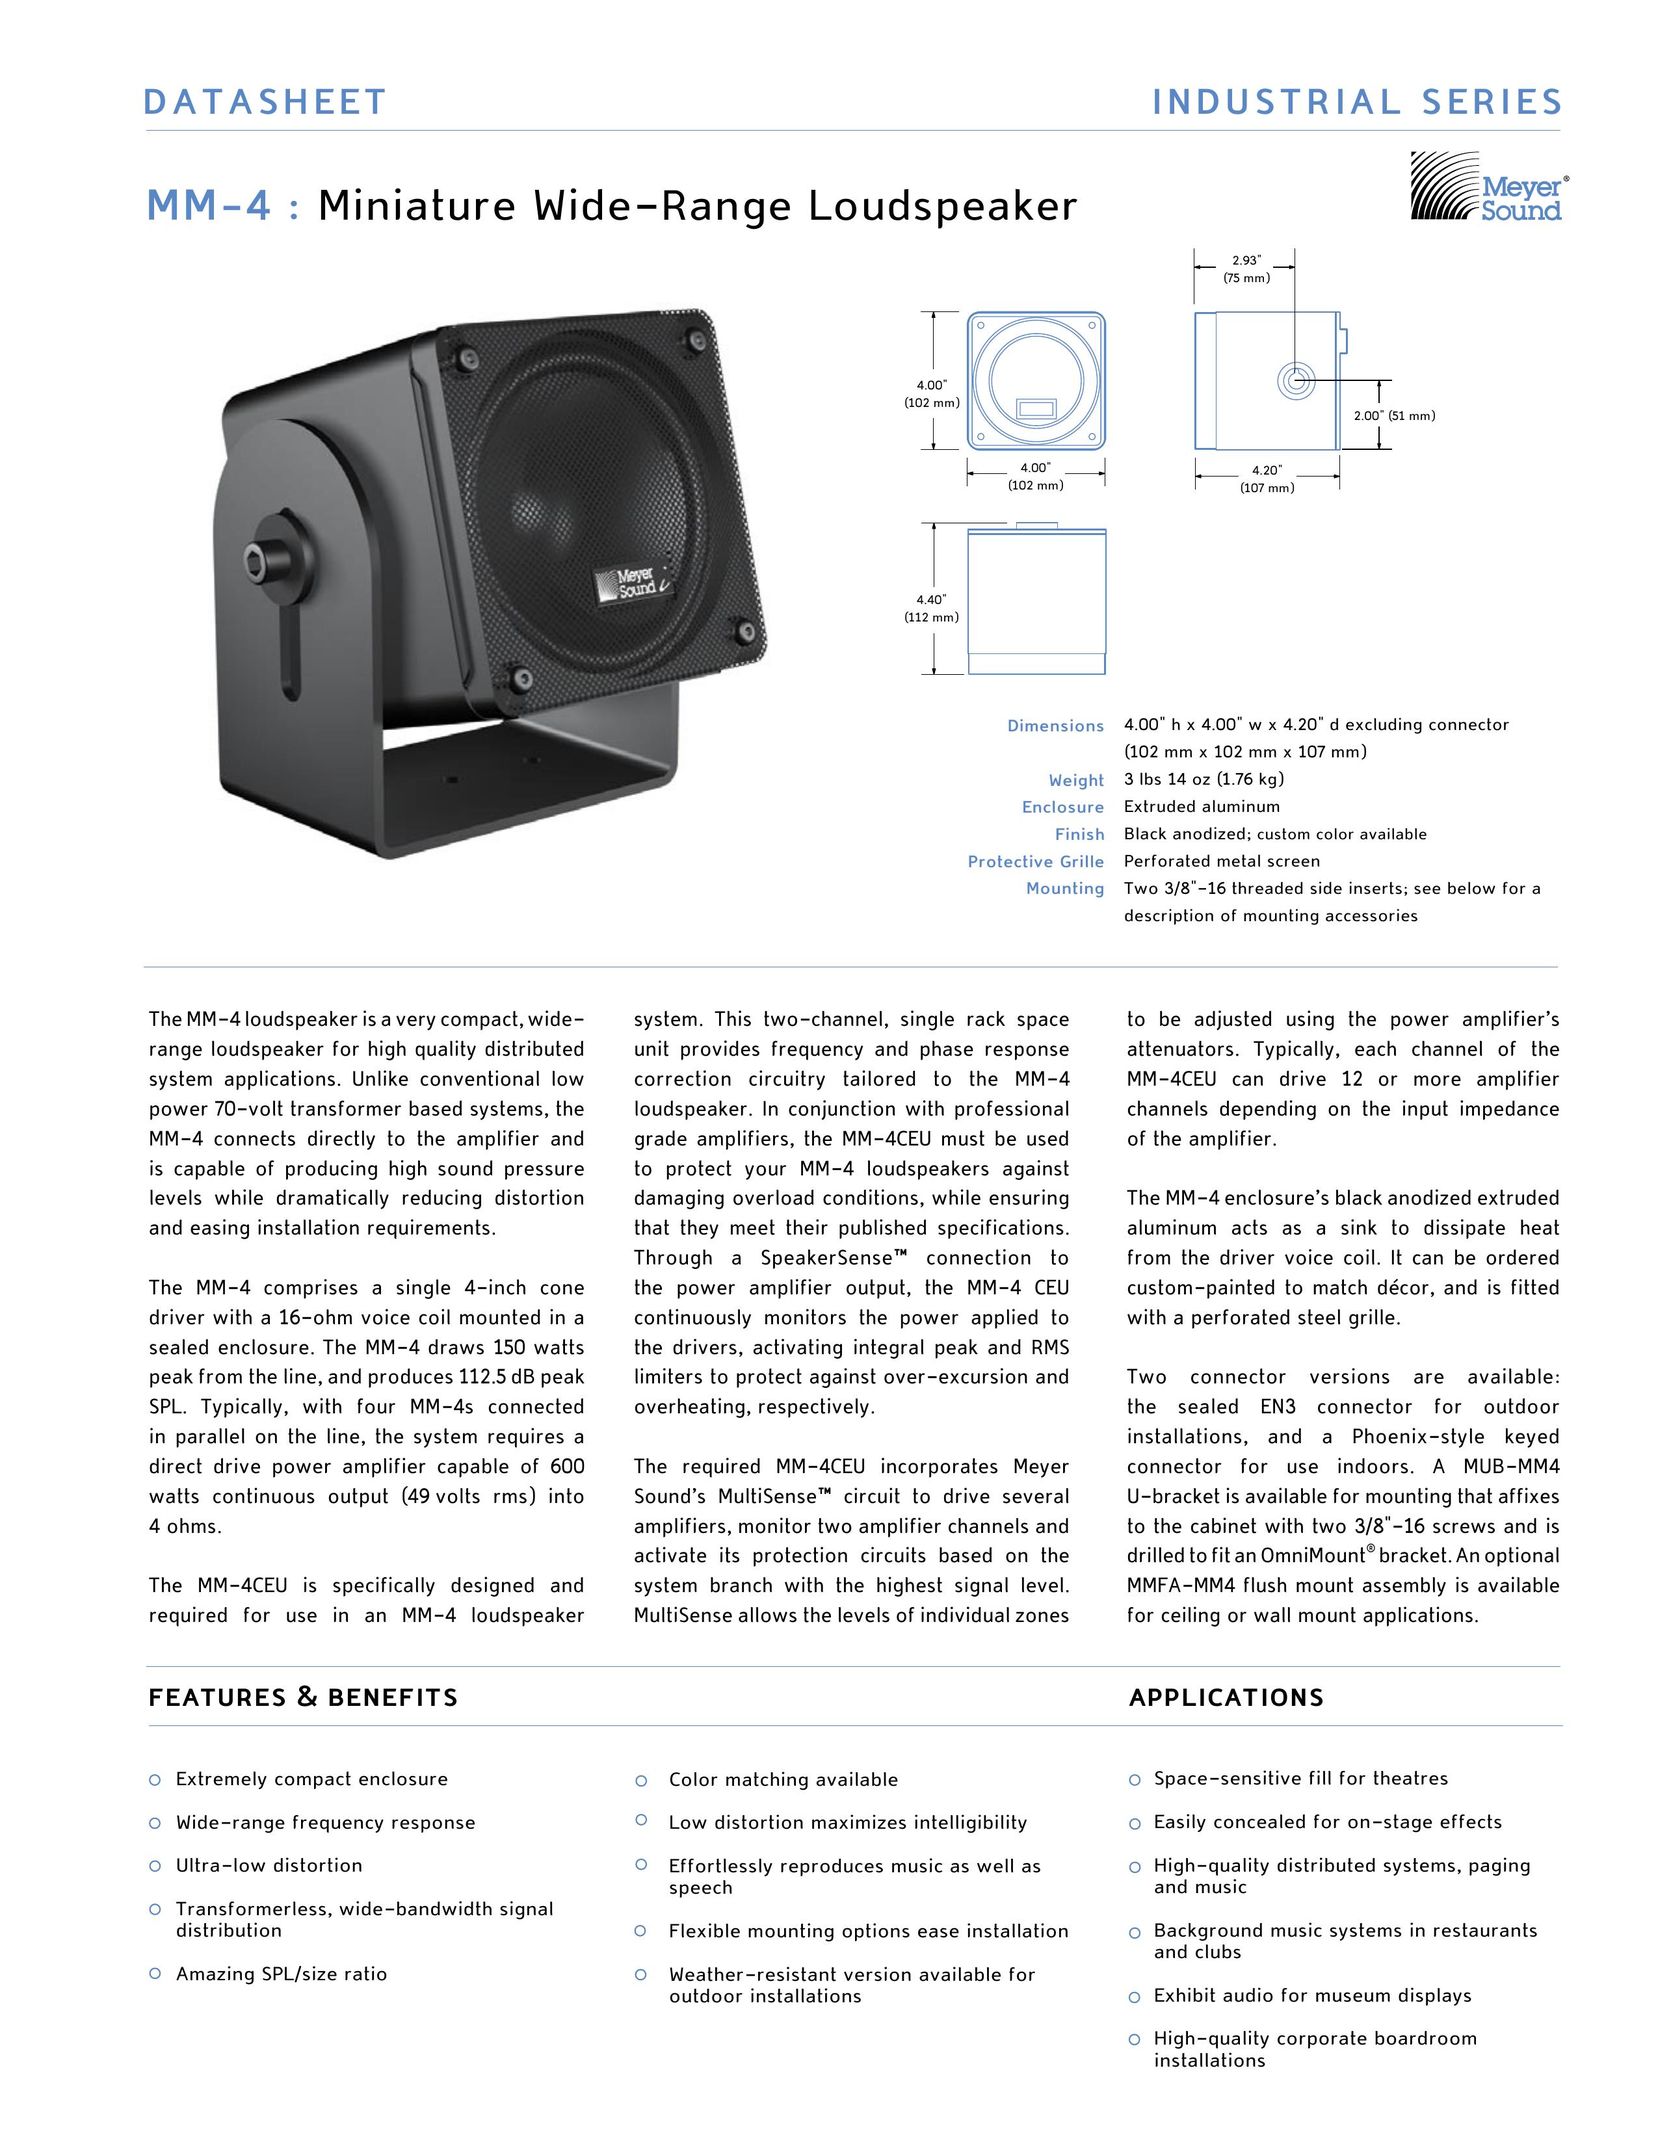 Meyer Sound MM-4 Portable Speaker User Manual